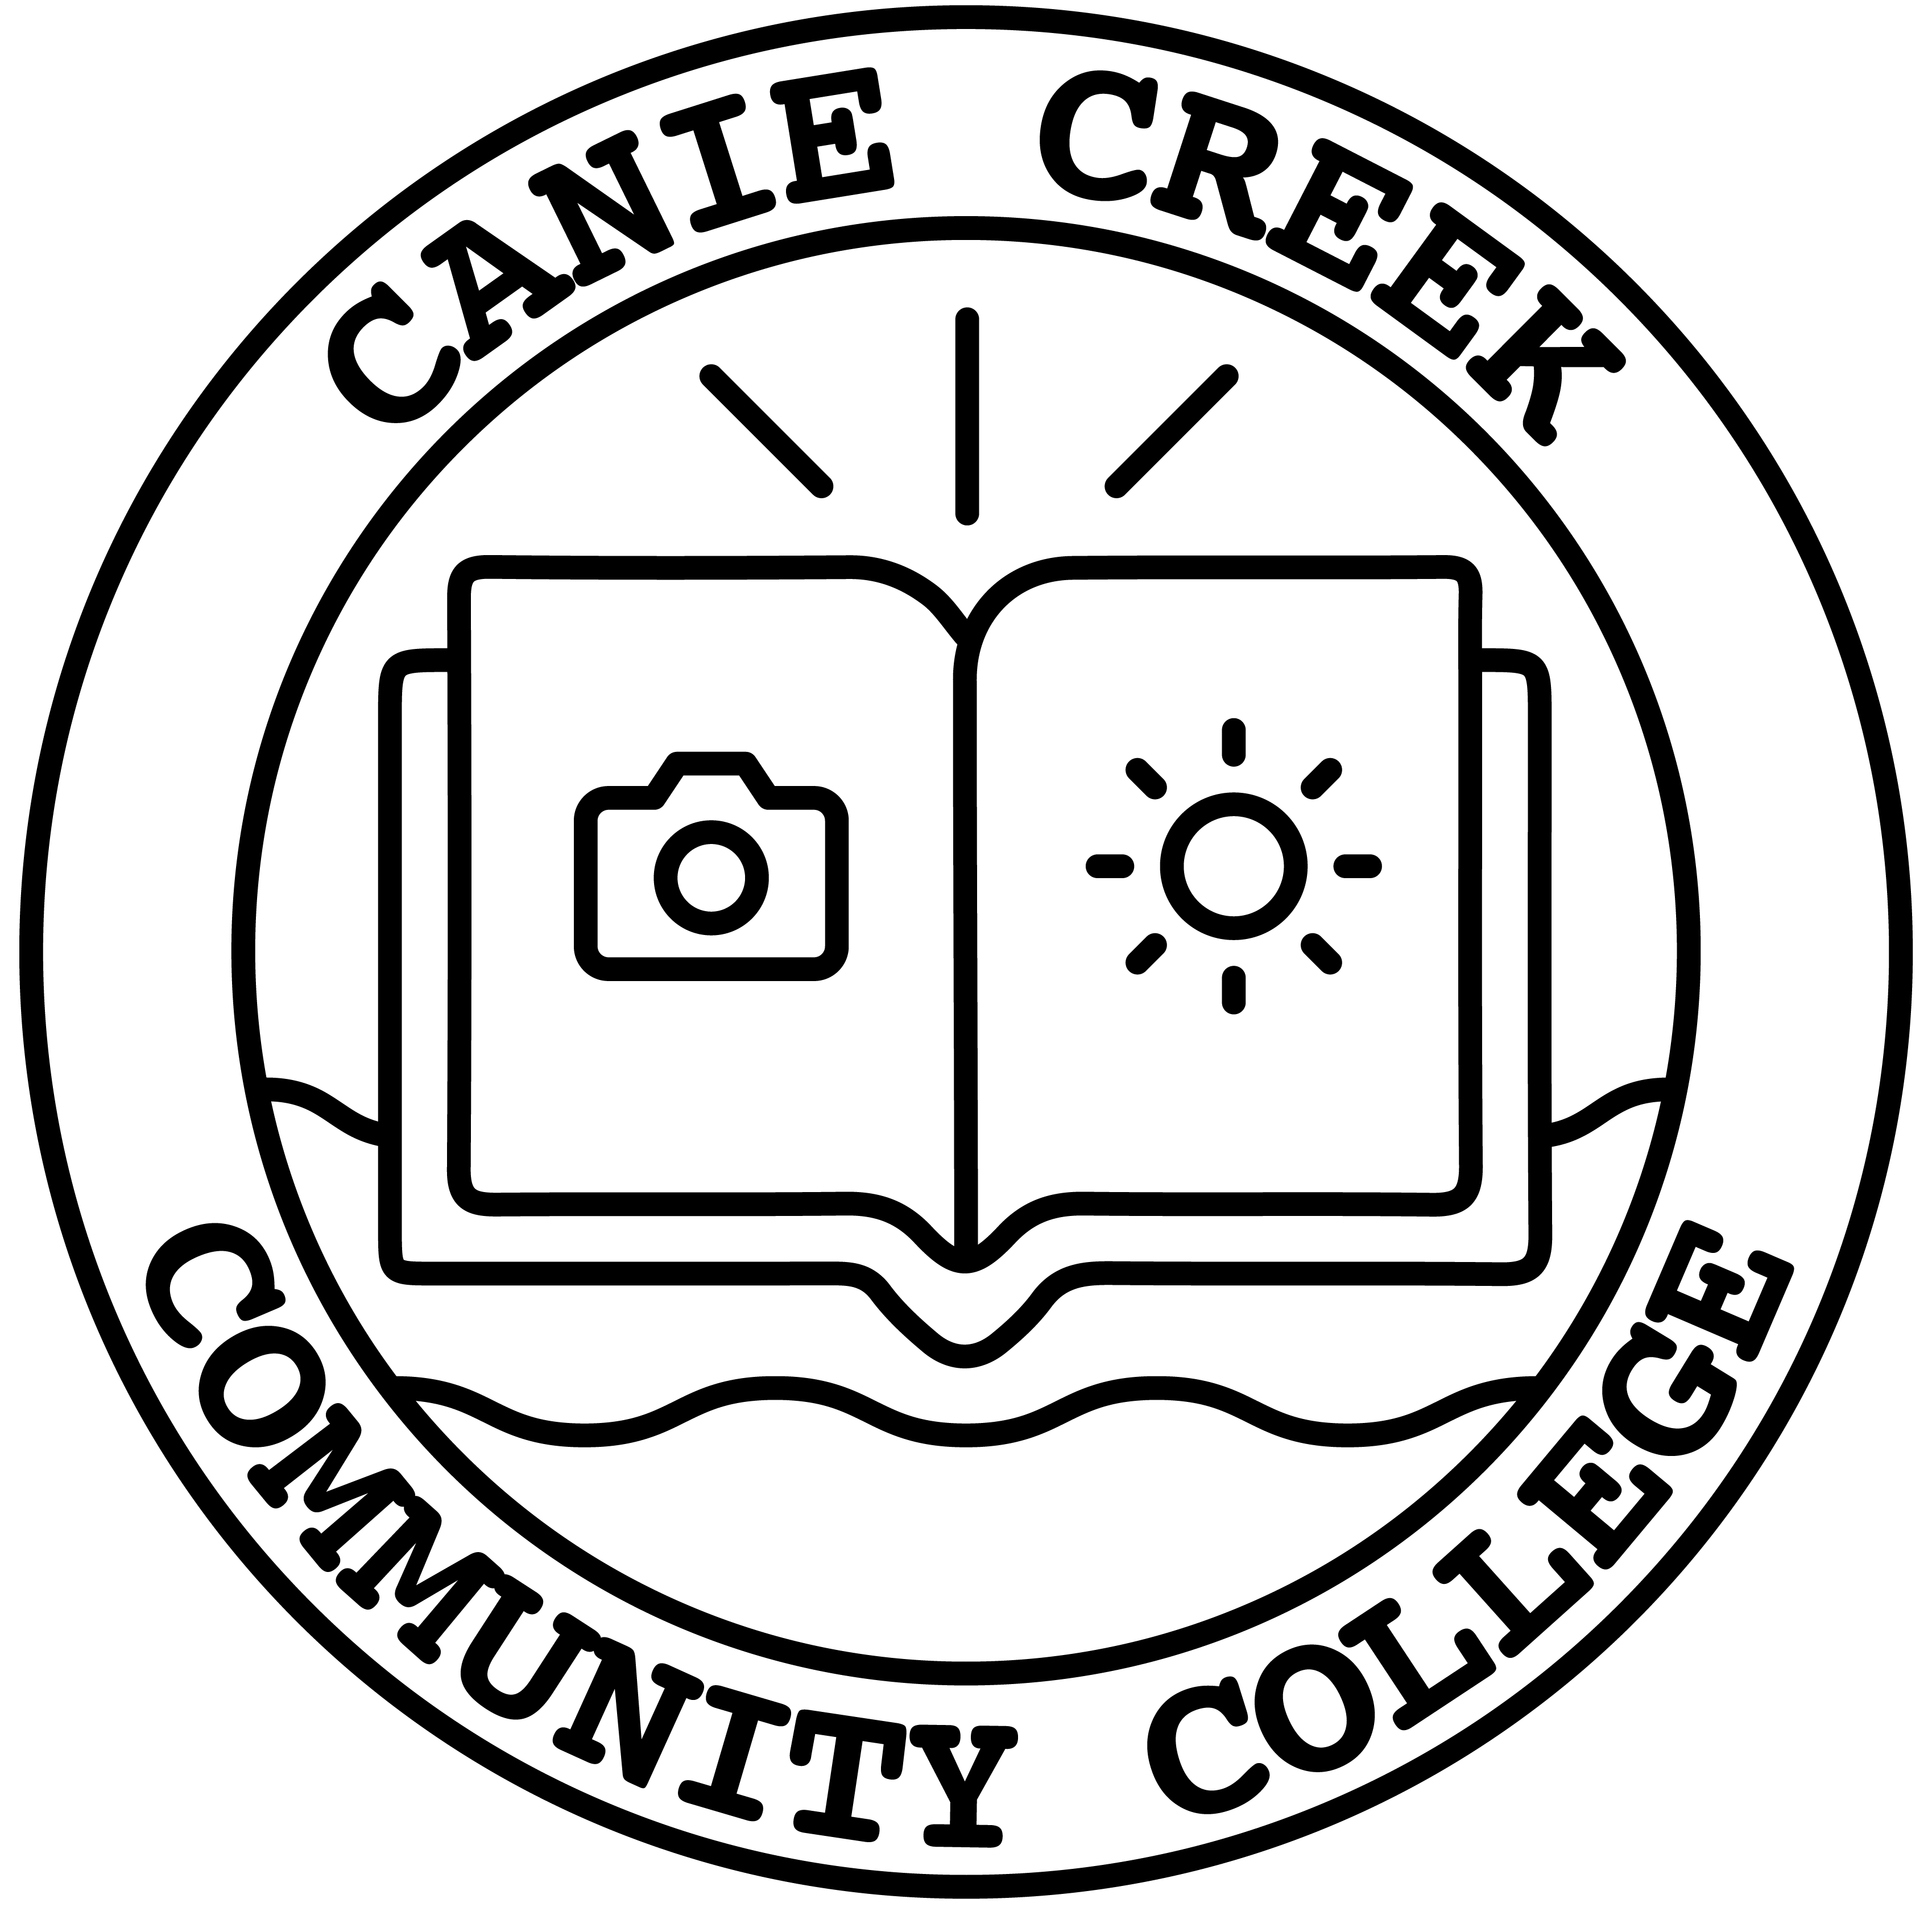 Canie Creek Community College Seal